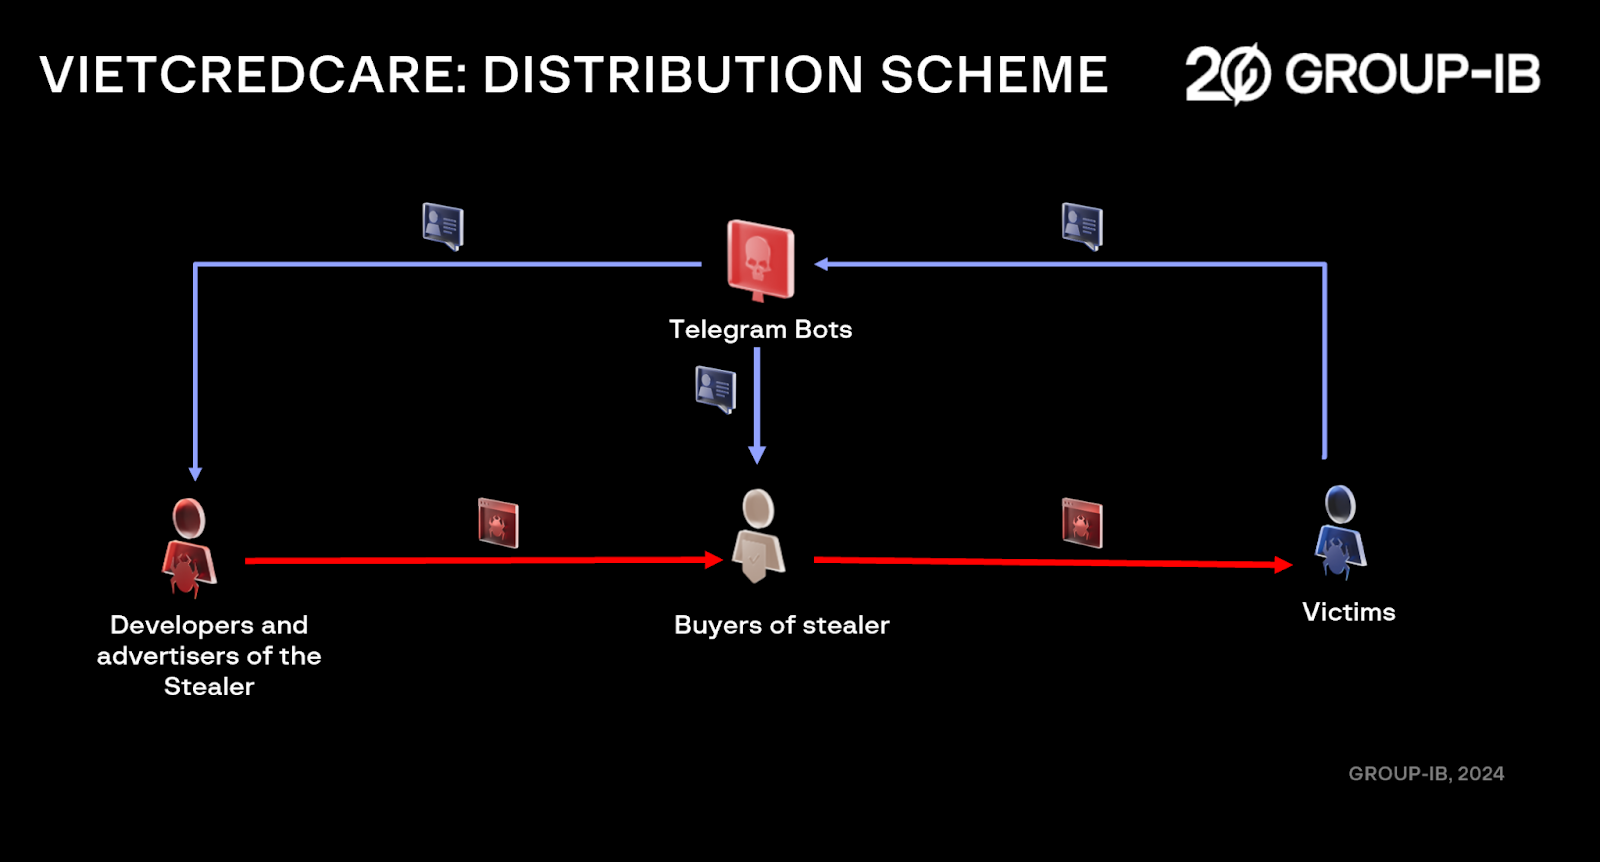 Distribution Scheme of the Vietnam Stealer campaign